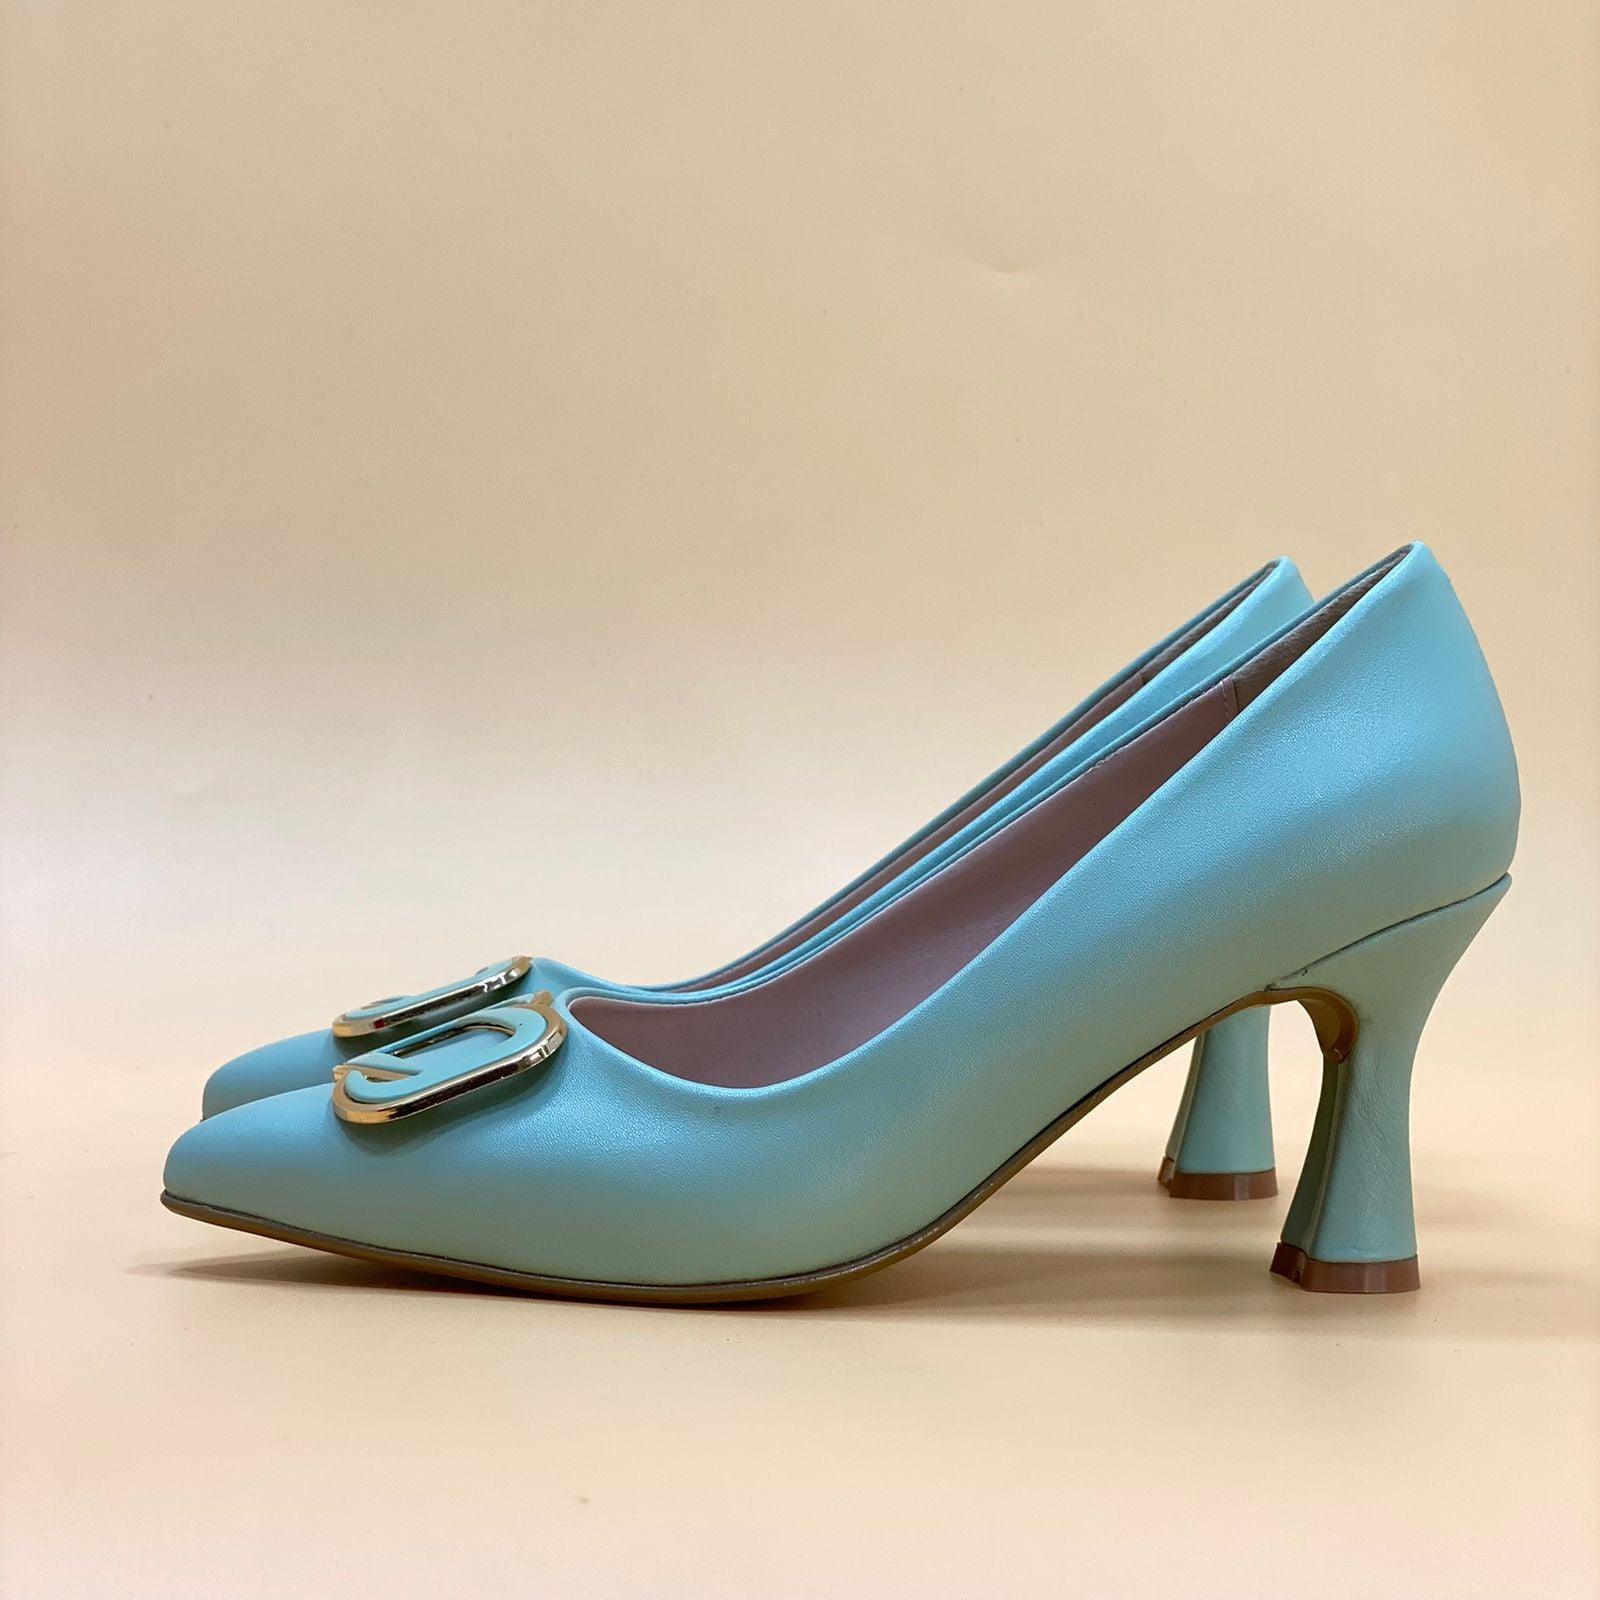 WOMEN SHOES HEELS W806 - Olive Tree Shoes 